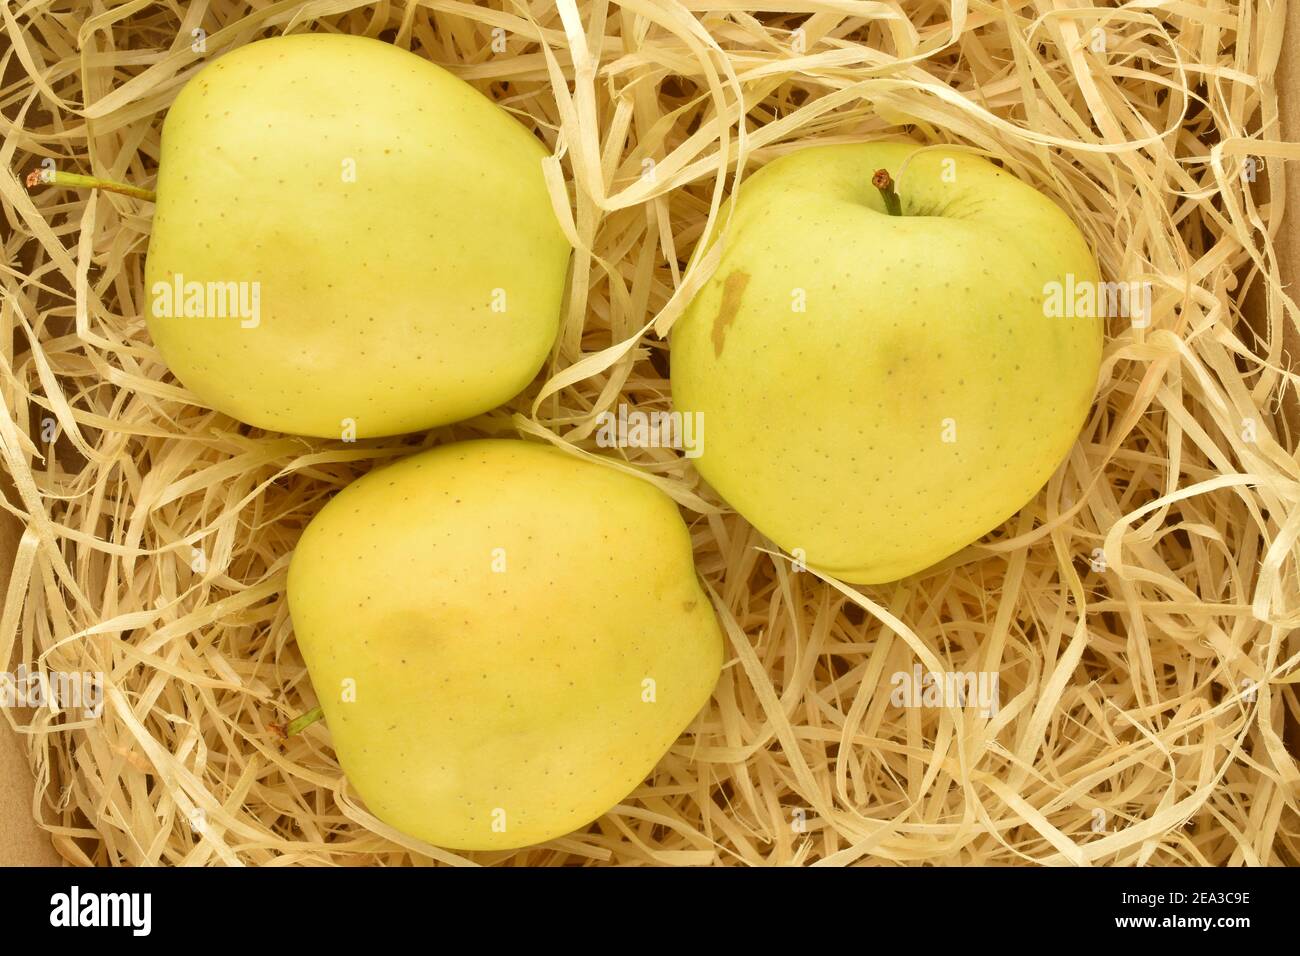 https://c8.alamy.com/comp/2EA3C9E/three-delicious-yellow-apples-on-wood-shavings-close-up-2EA3C9E.jpg